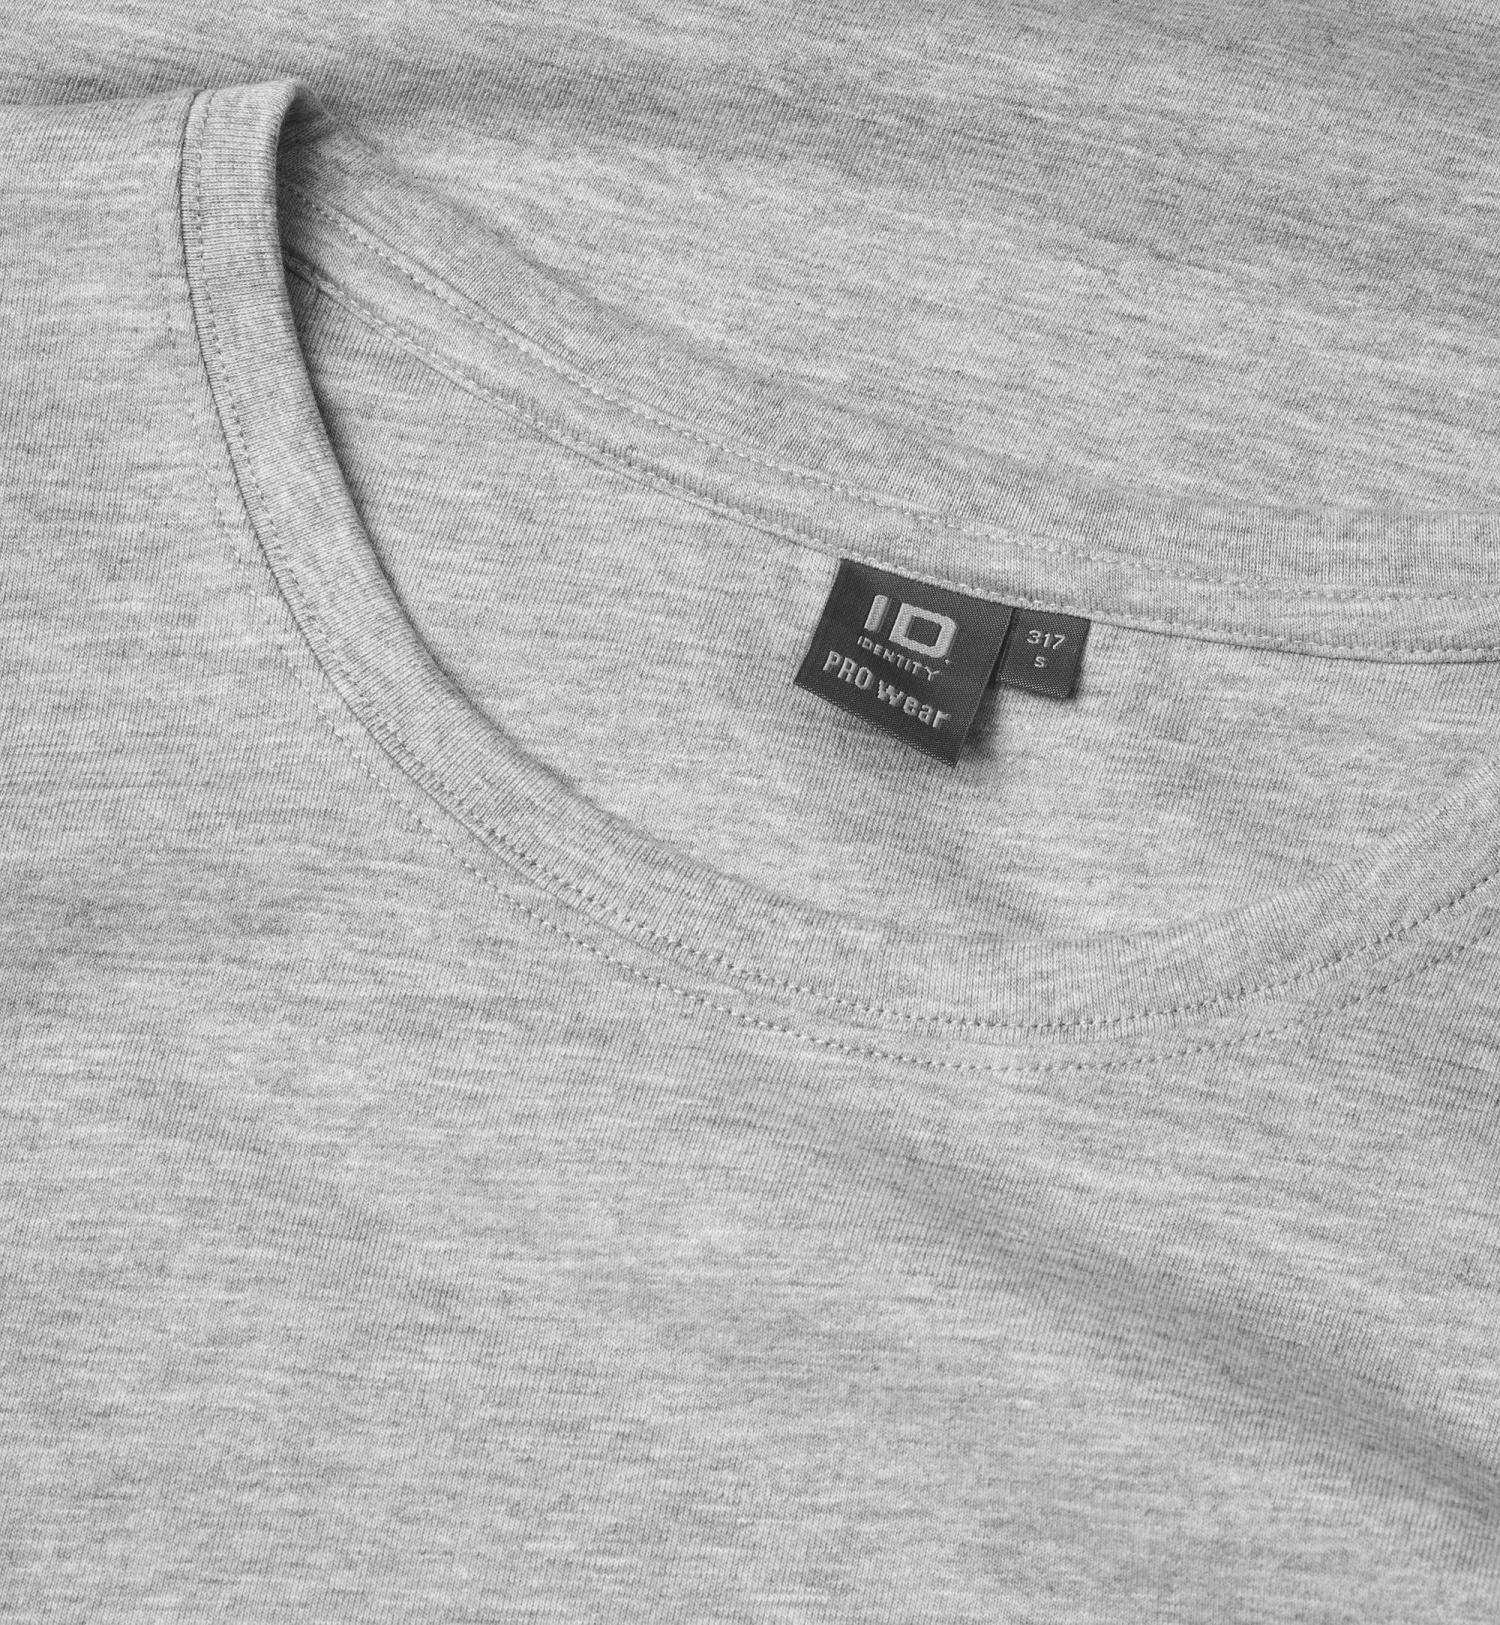 T-shirt PRO Wear | light | damski 0317-Grey melange